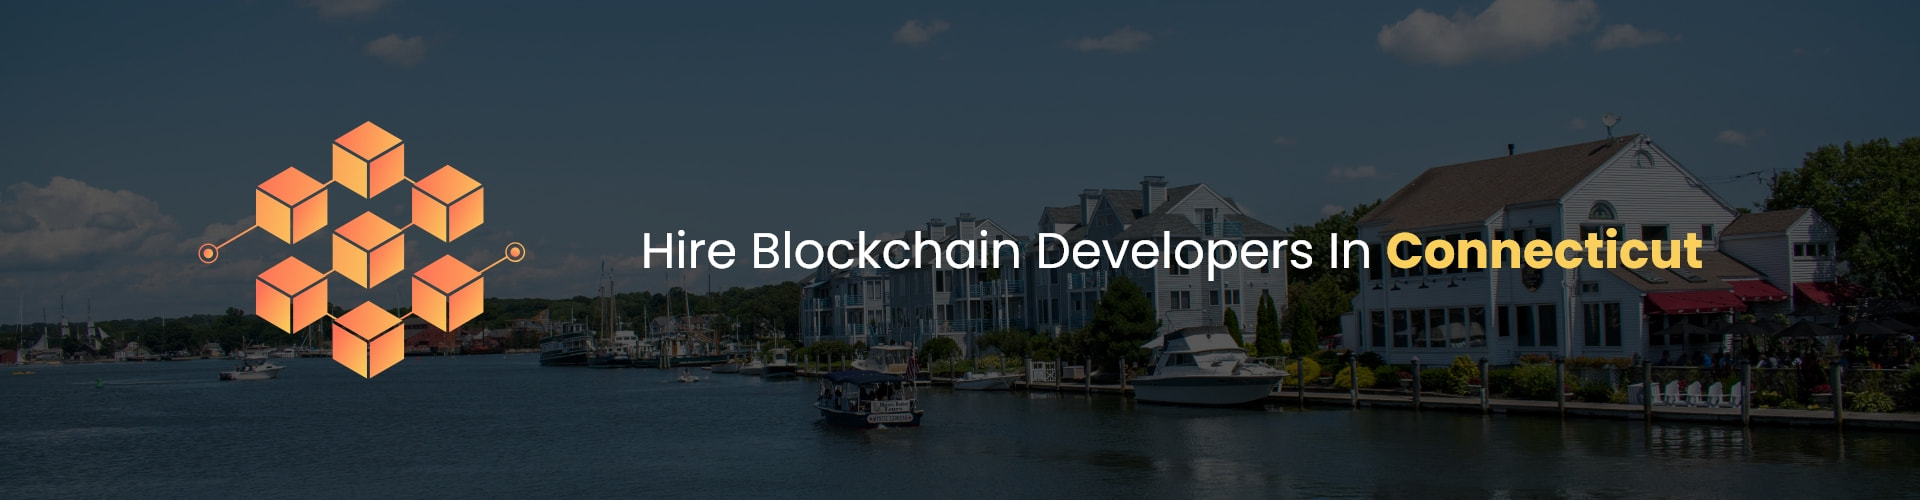 hire blockchain developers in connecticut